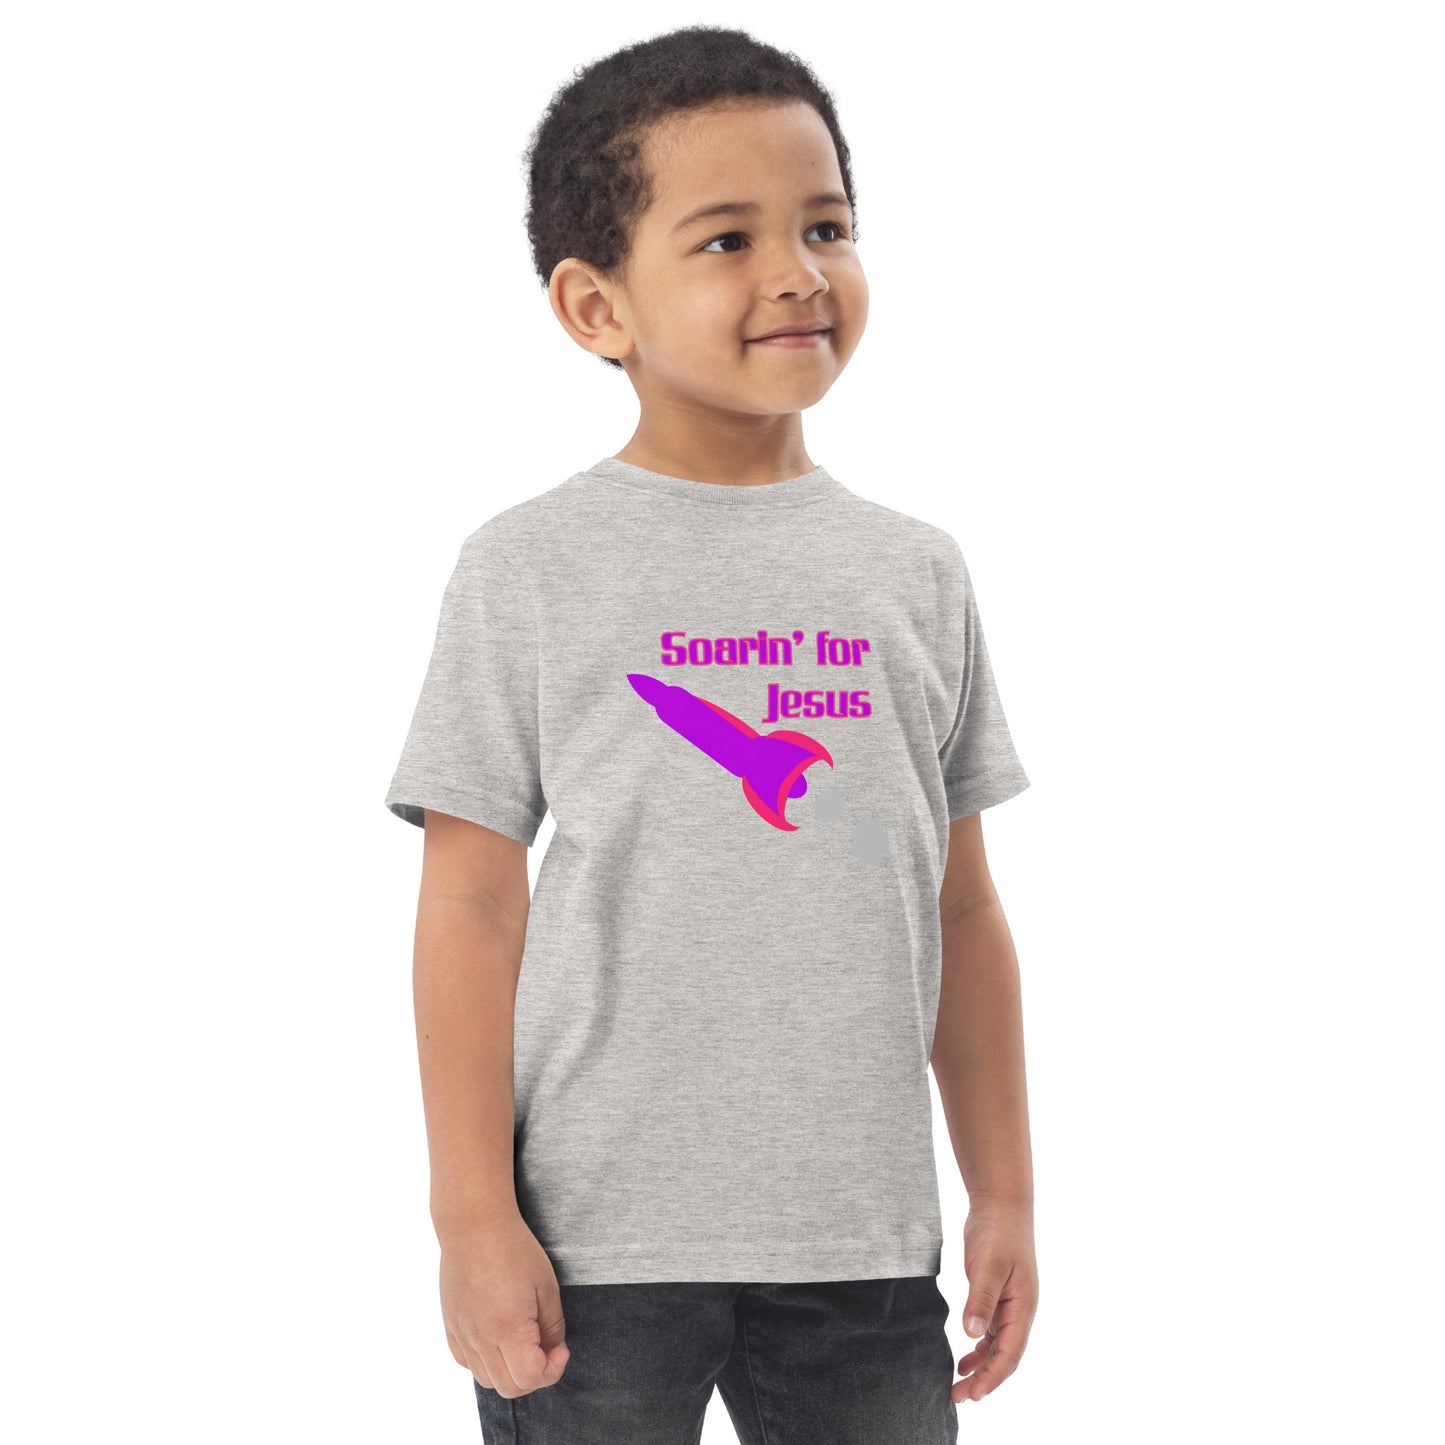 Soarin' for Jesus Toddler T-Shirt